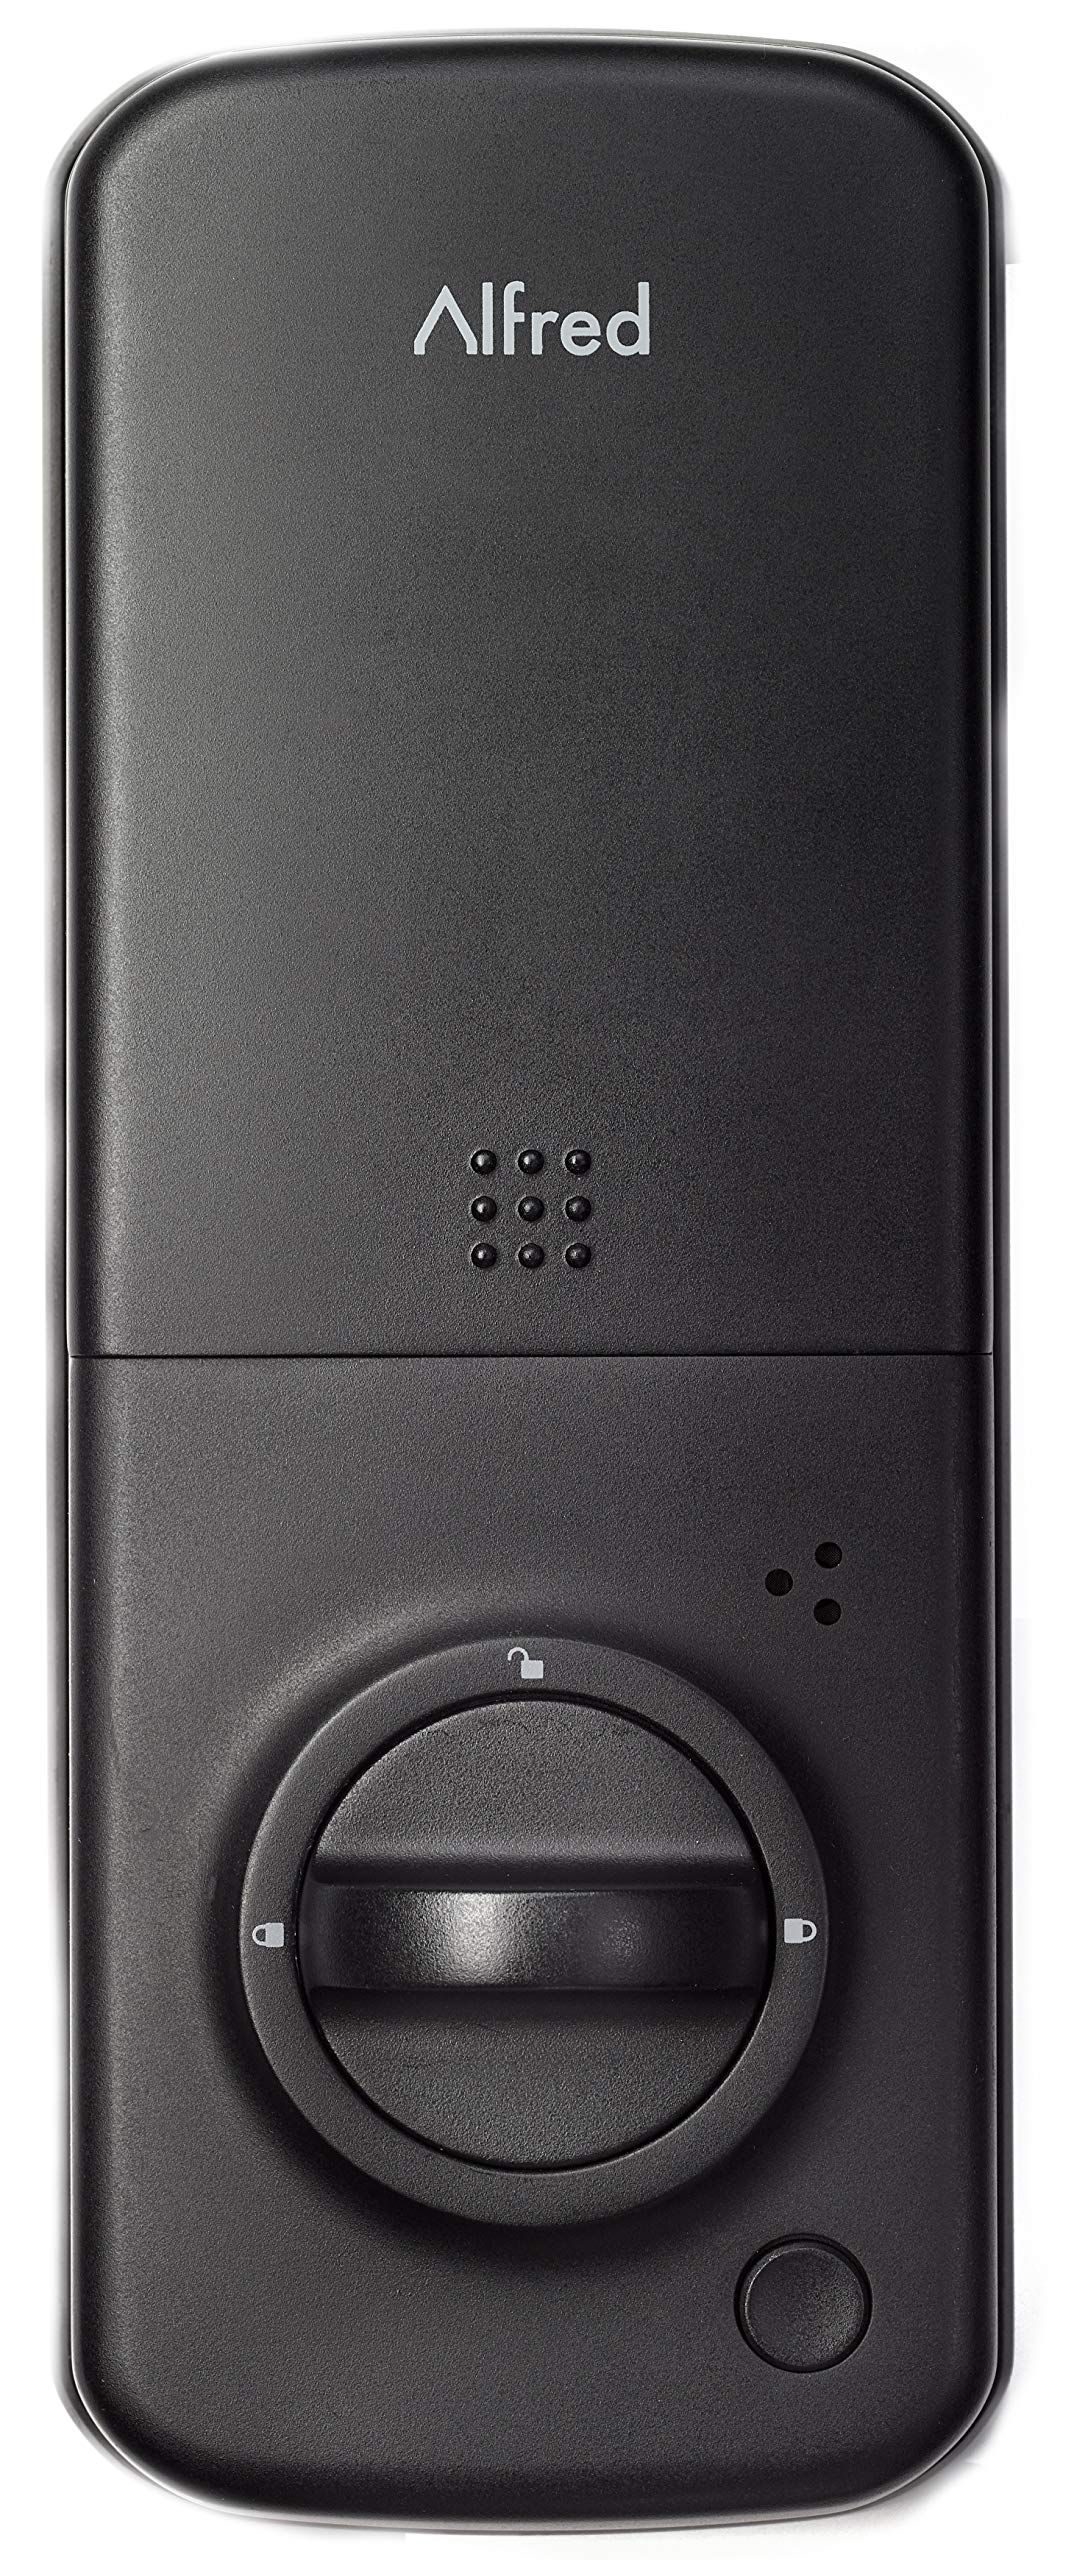 Alfred DB2 Smart Door Lock Deadbolt Touchscreen Keypad, Pin Code + Bluetooth, Up to 20 Pin Codes (Gold)